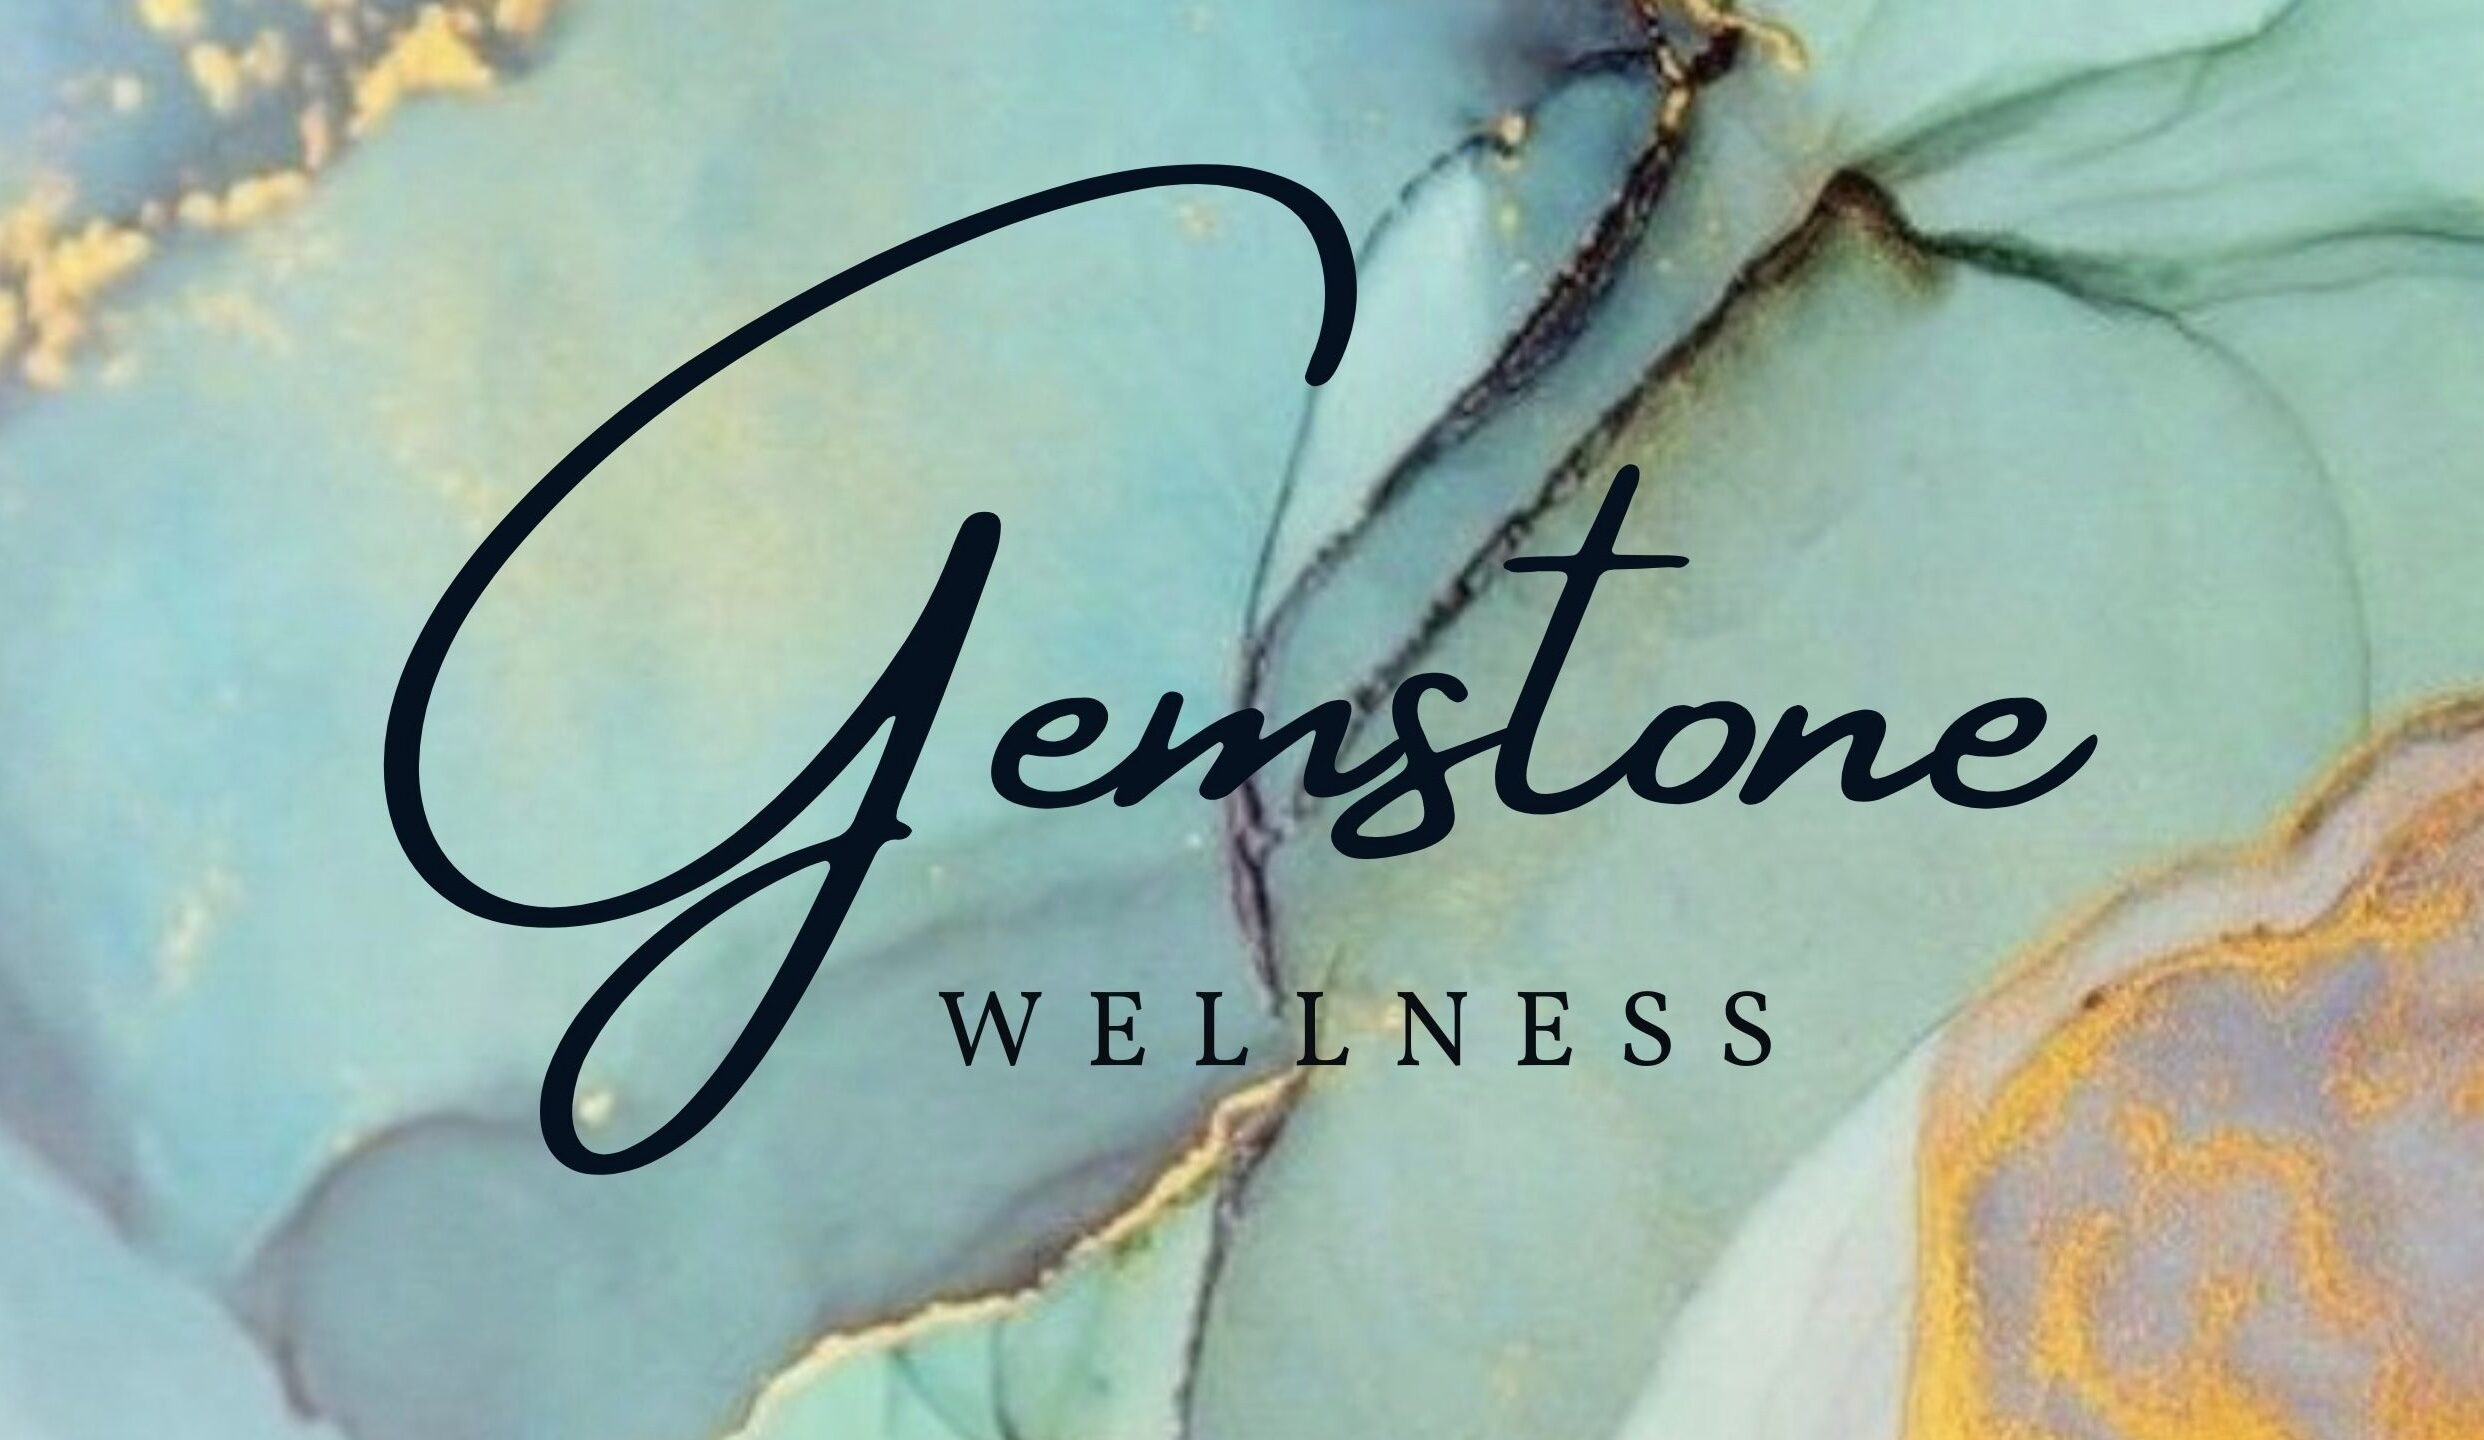 Gemstone Wellness